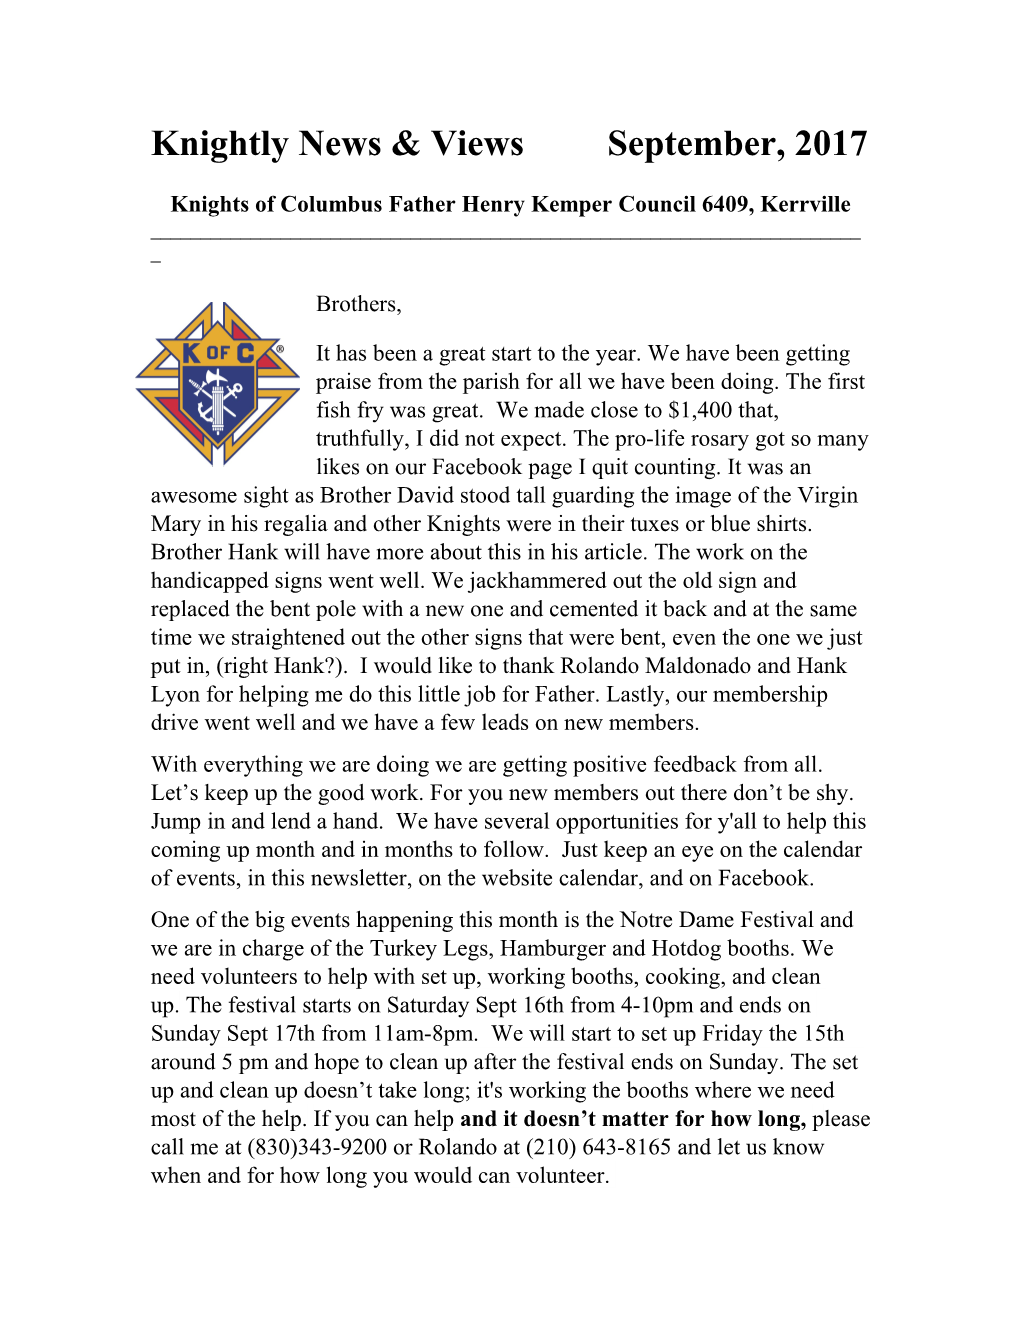 Knightly News & Views s1